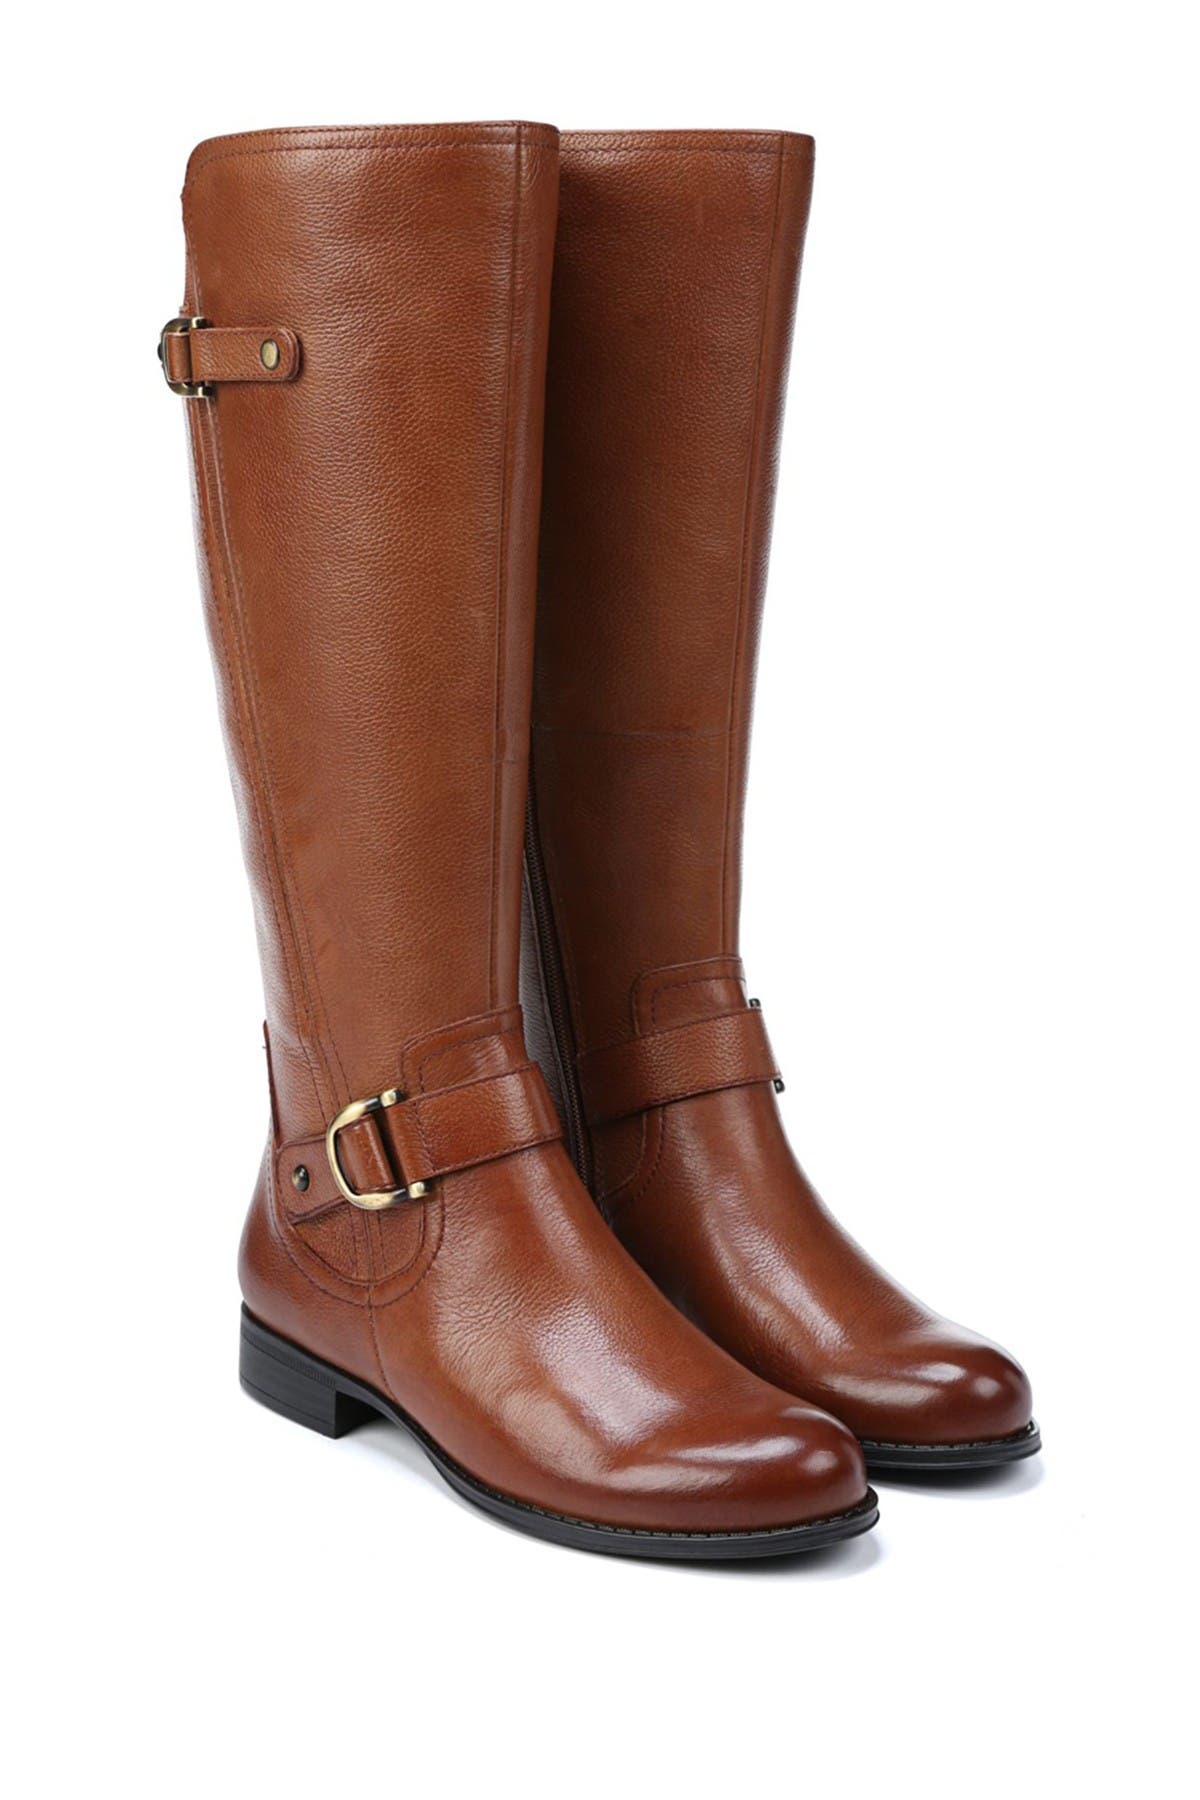 naturalizer kody leather tall boot